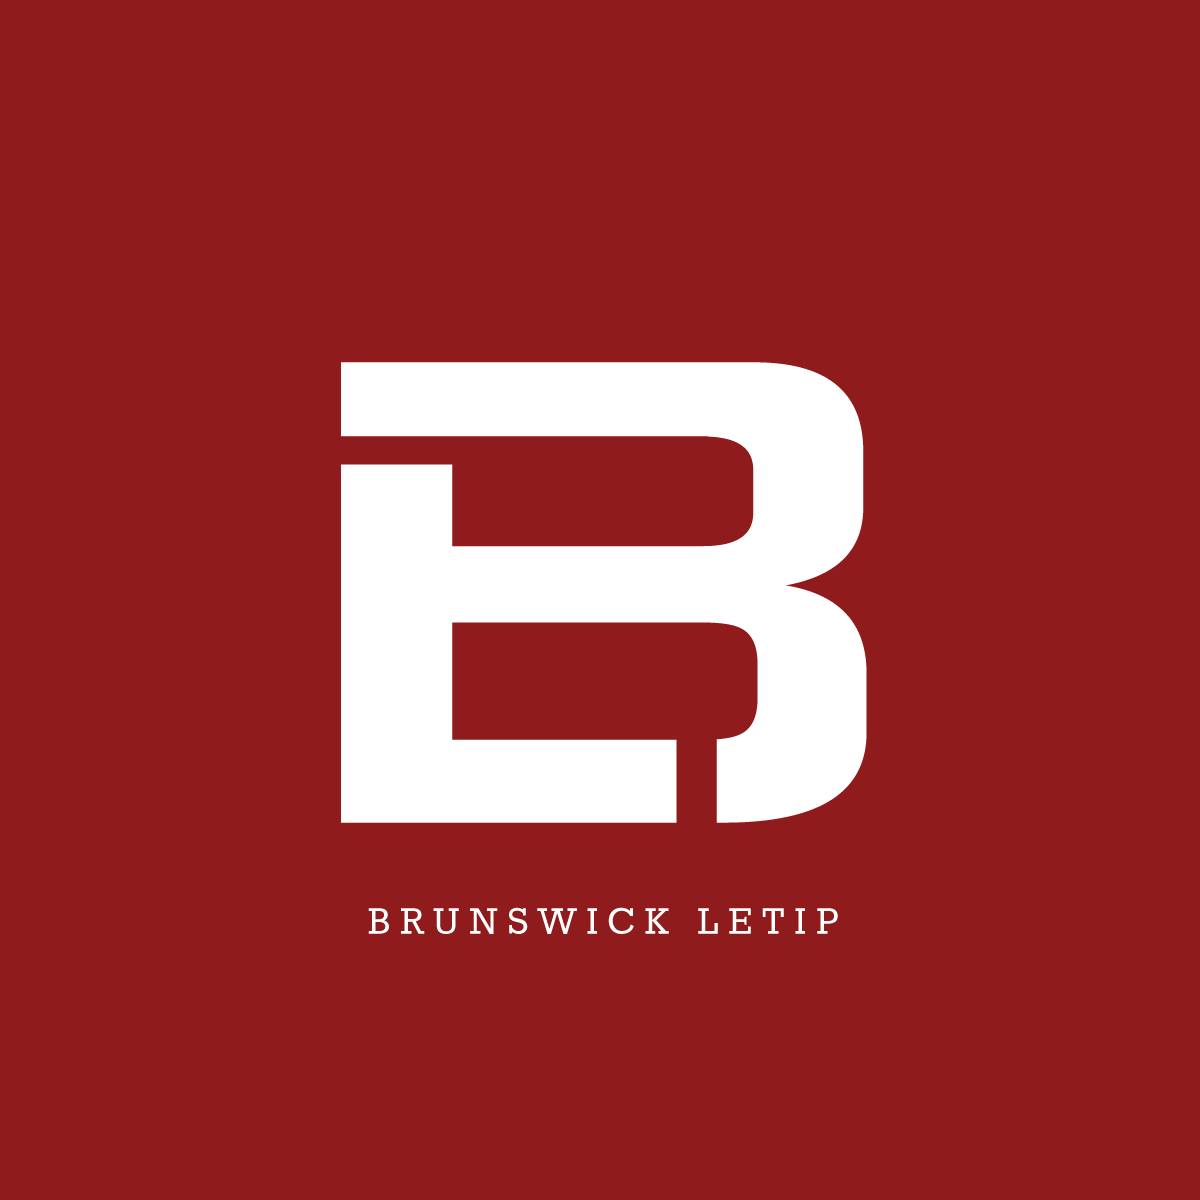 New Brunswick LeTip Identity by Logo Design Co.